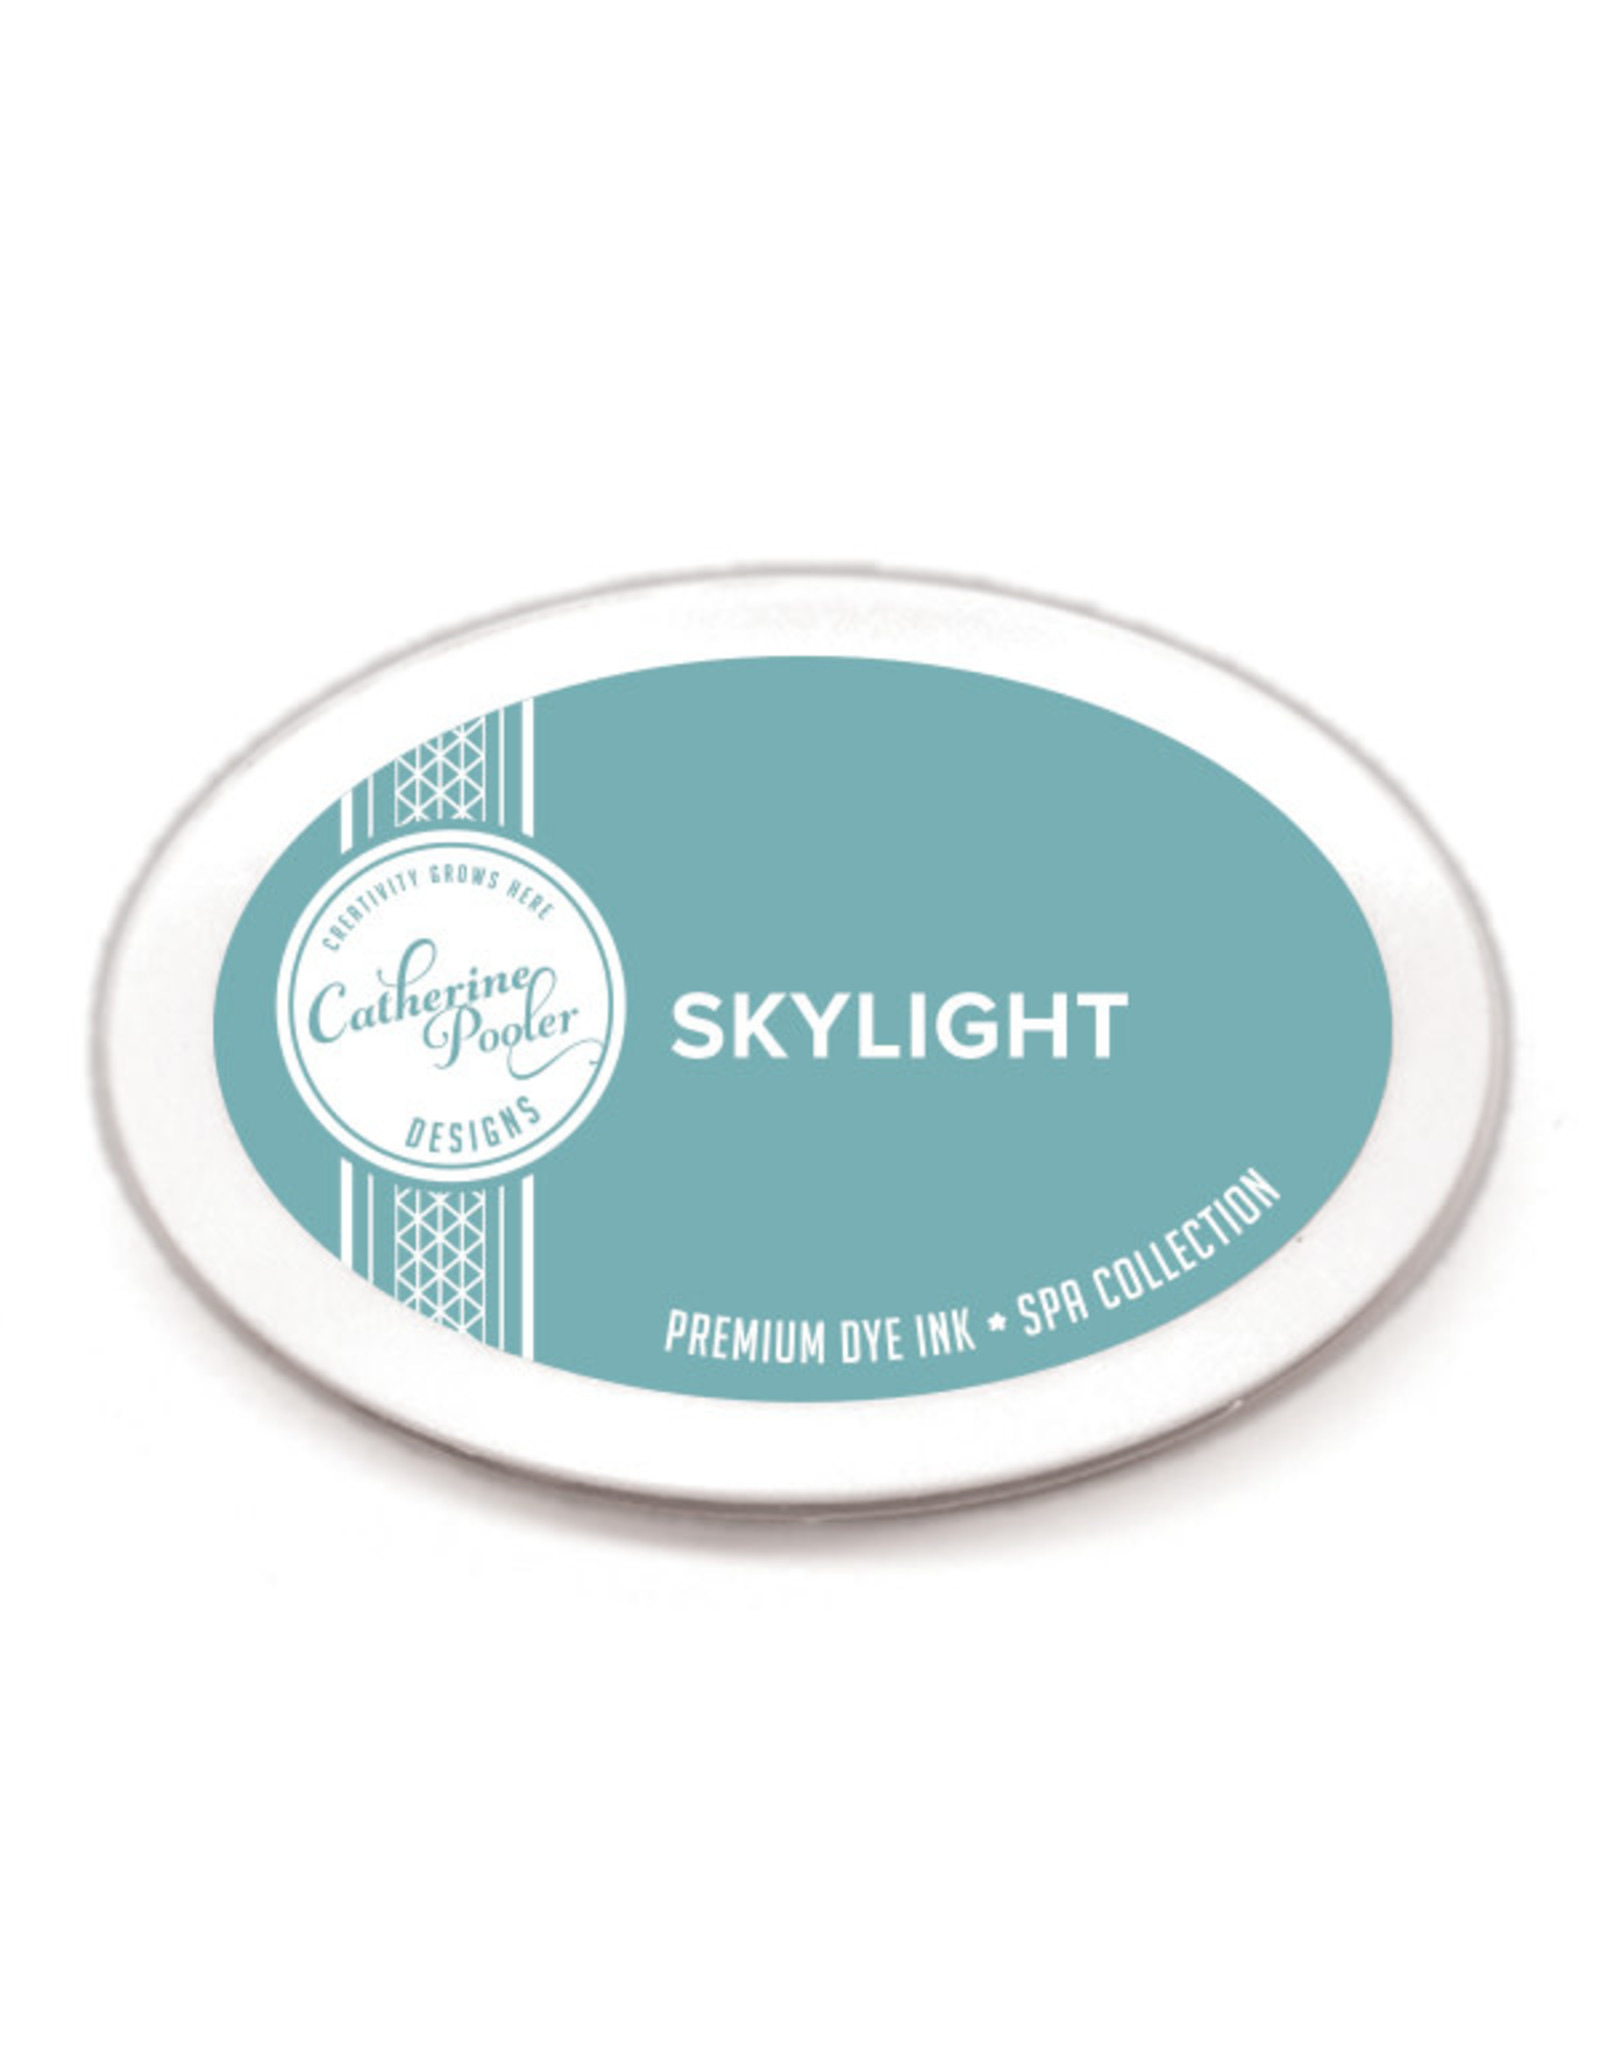 Catherine Pooler Designs Skylight Ink Pad